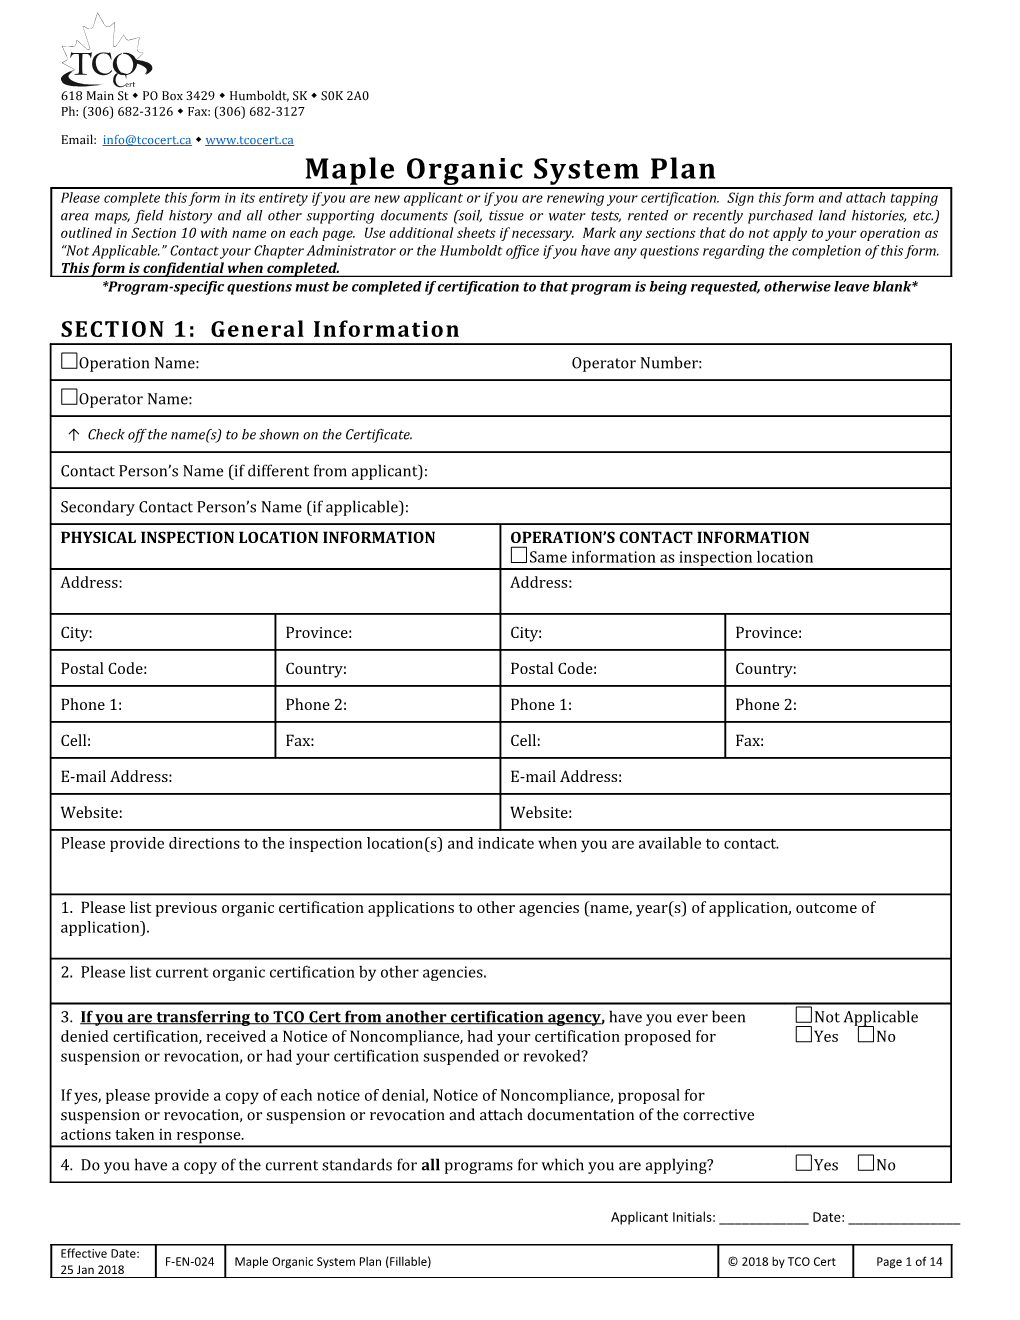 Maple Organic System Plan s1